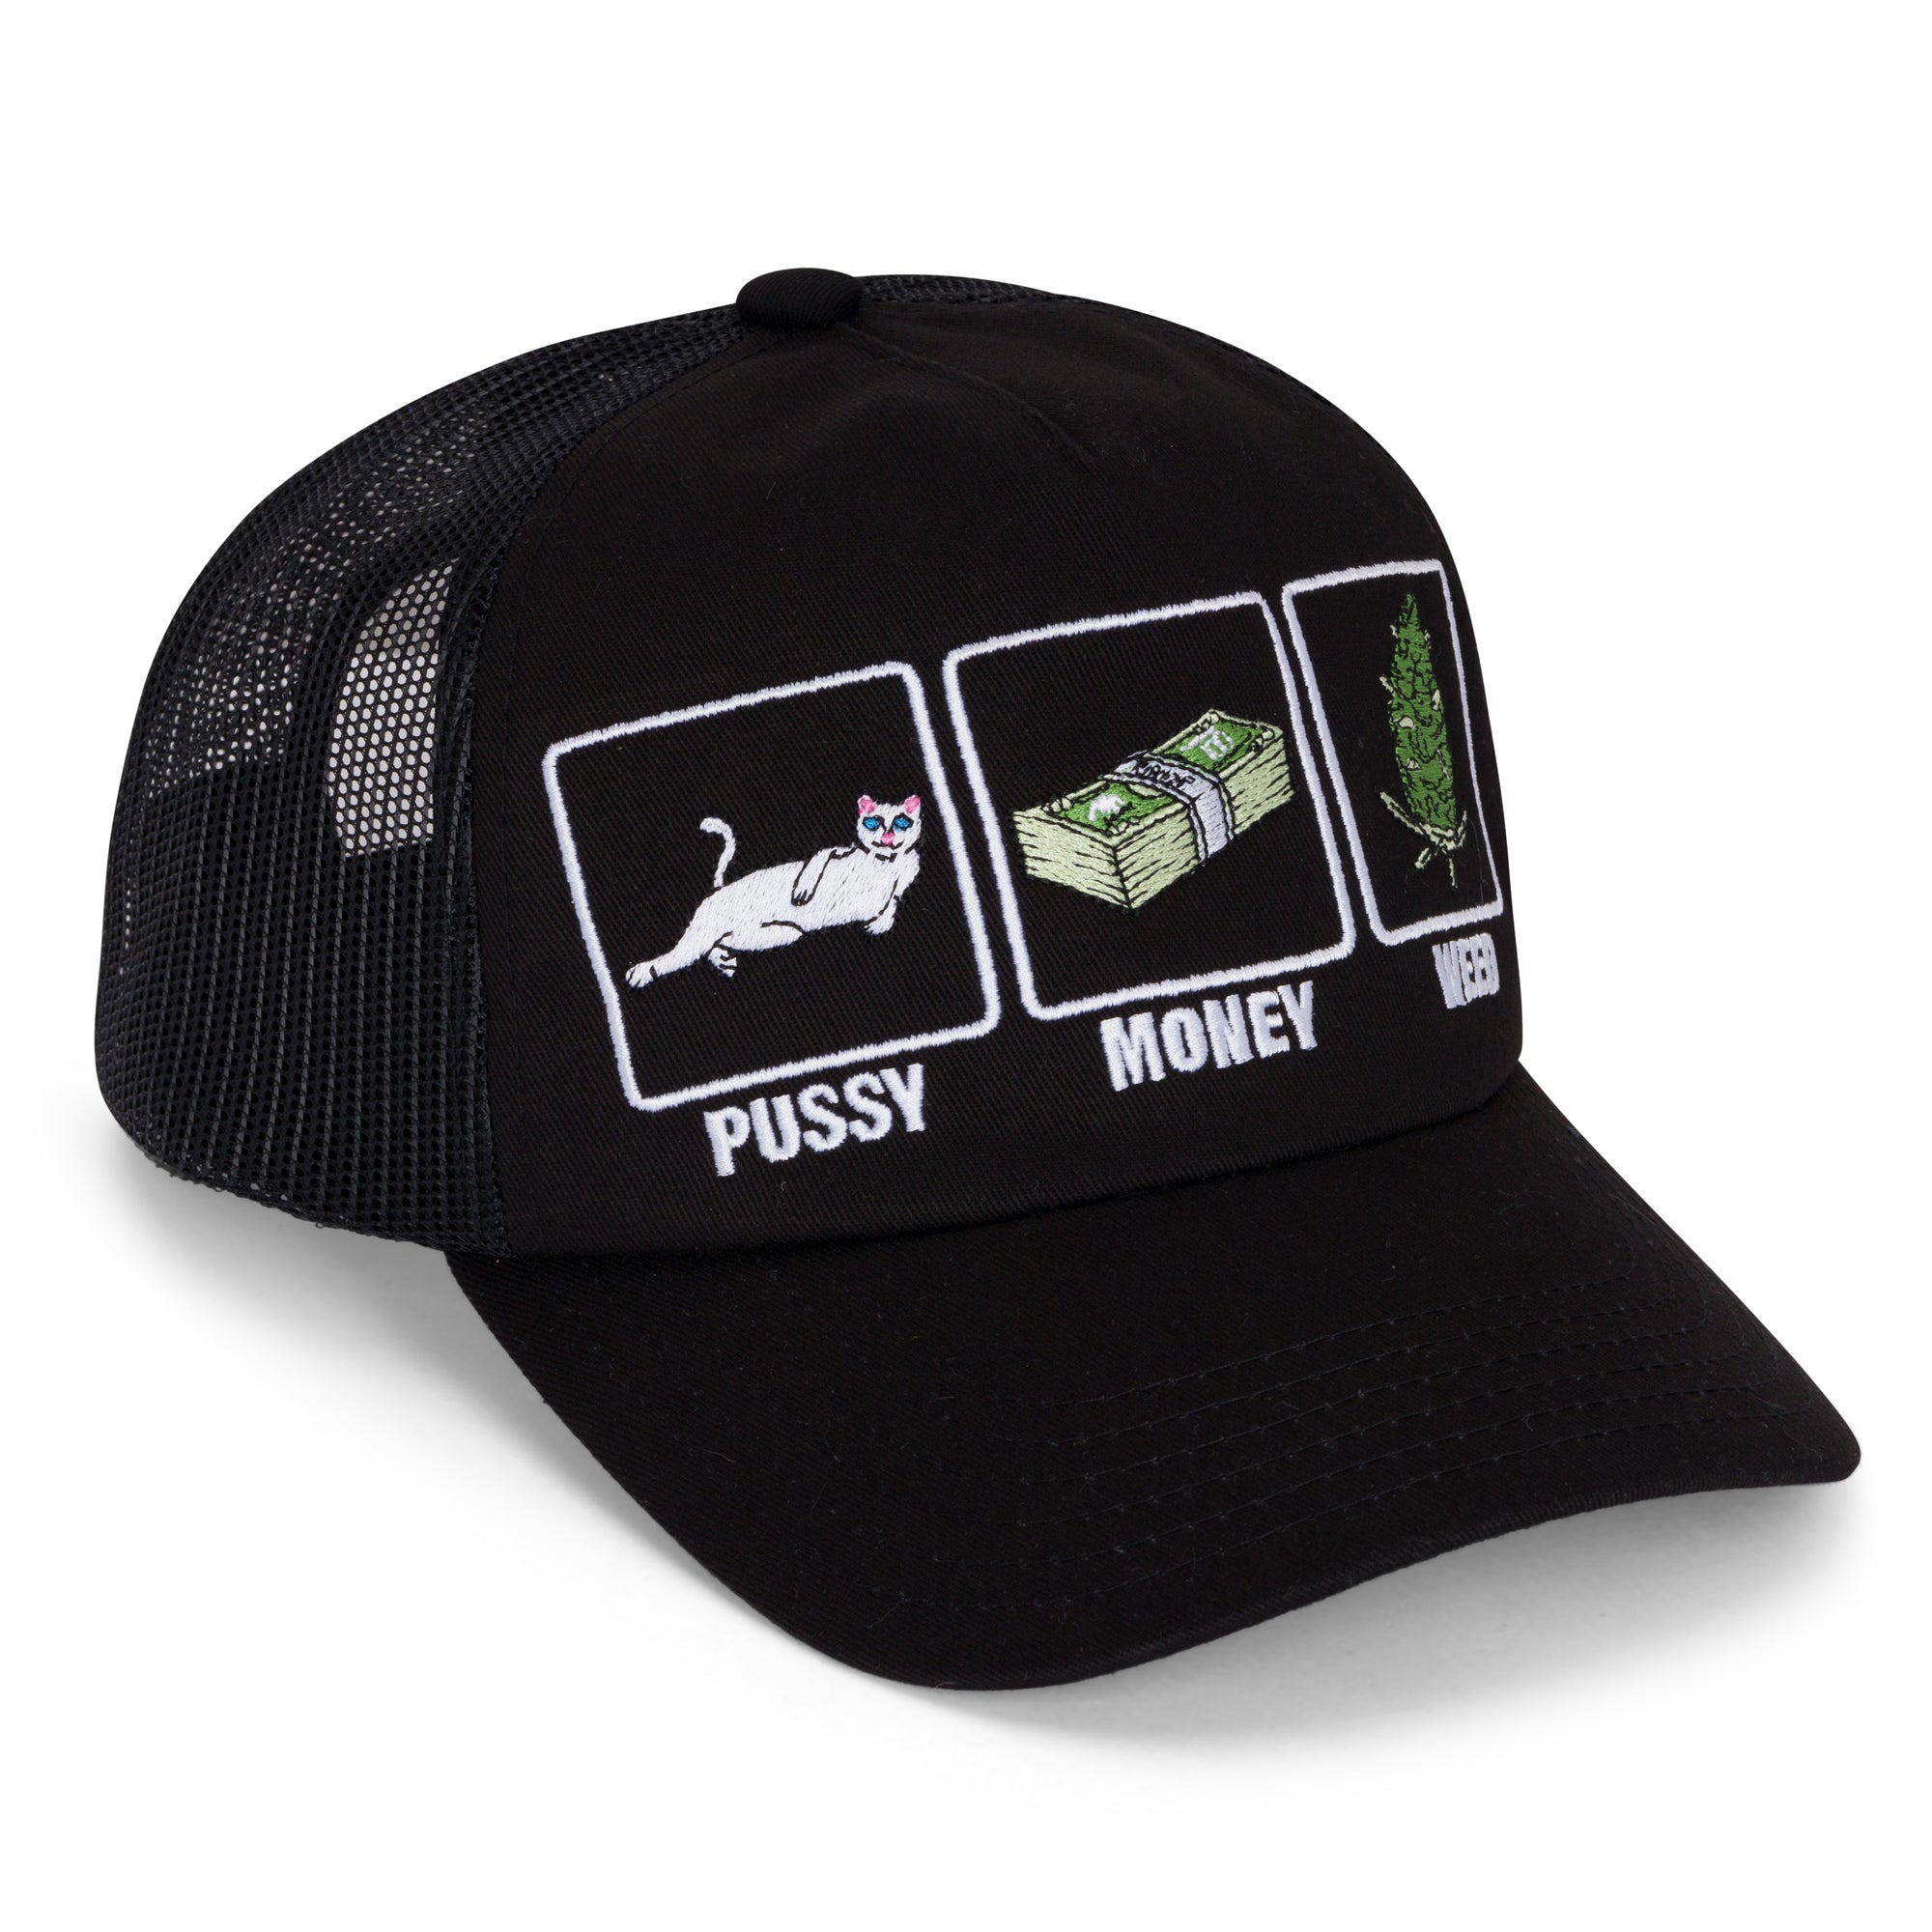 Pussy Money Weed Trucker Hat (Black)